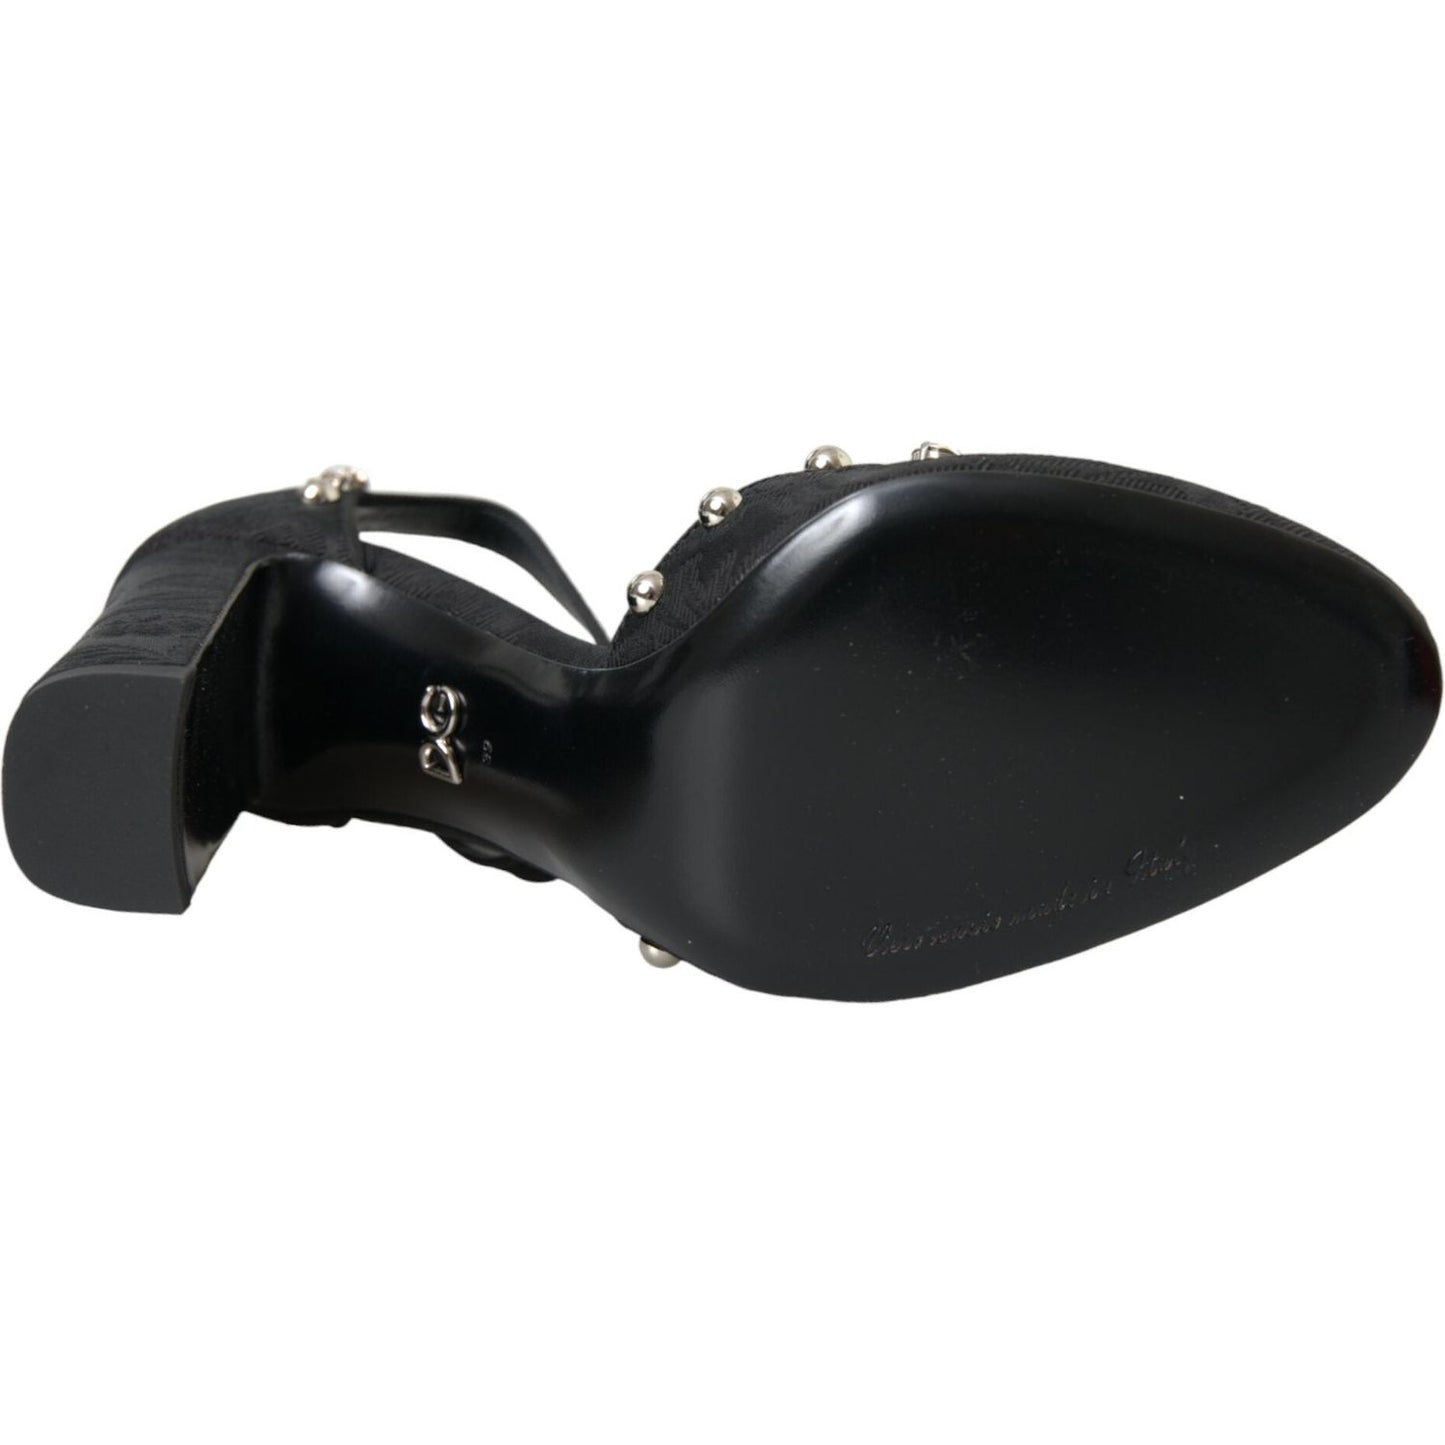 Dolce & Gabbana Black Lilies Crystal Heels Pumps Shoes black-lilies-crystal-heels-pumps-shoes